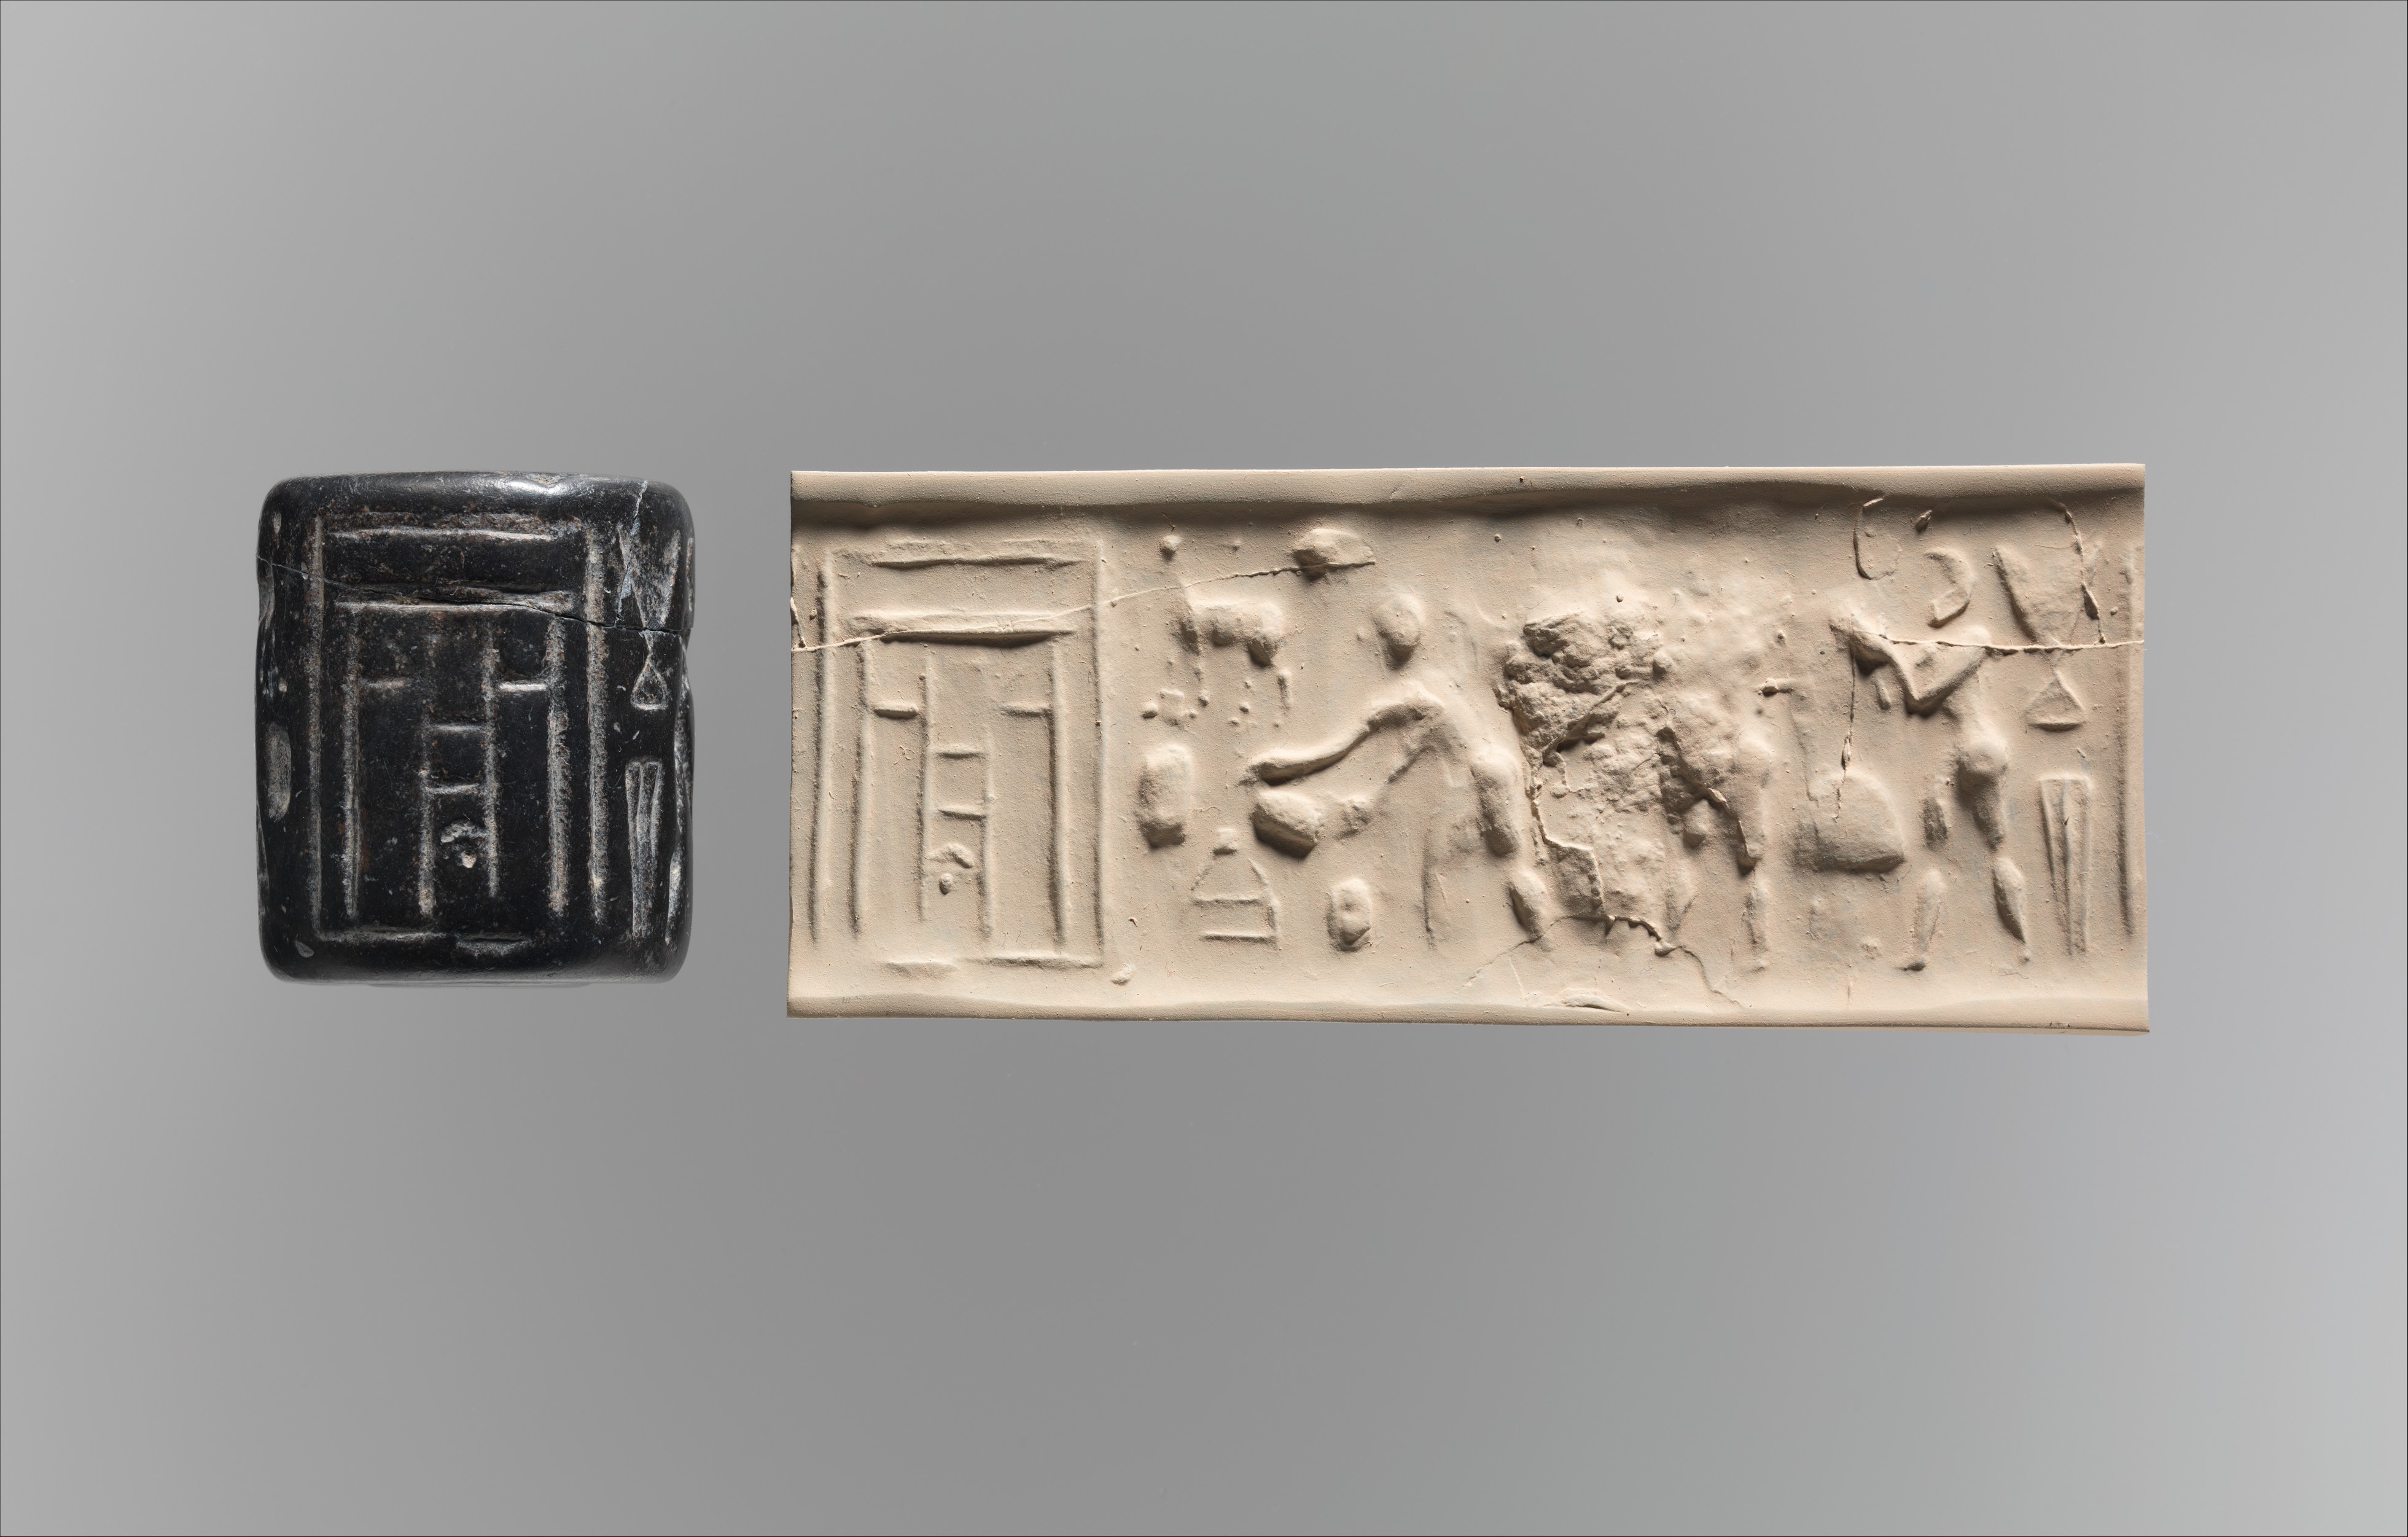 ANCIENT Sumer Uruk Mesopotamia CYLINDER SEAL Clay Impression Ritual  3000 BC 